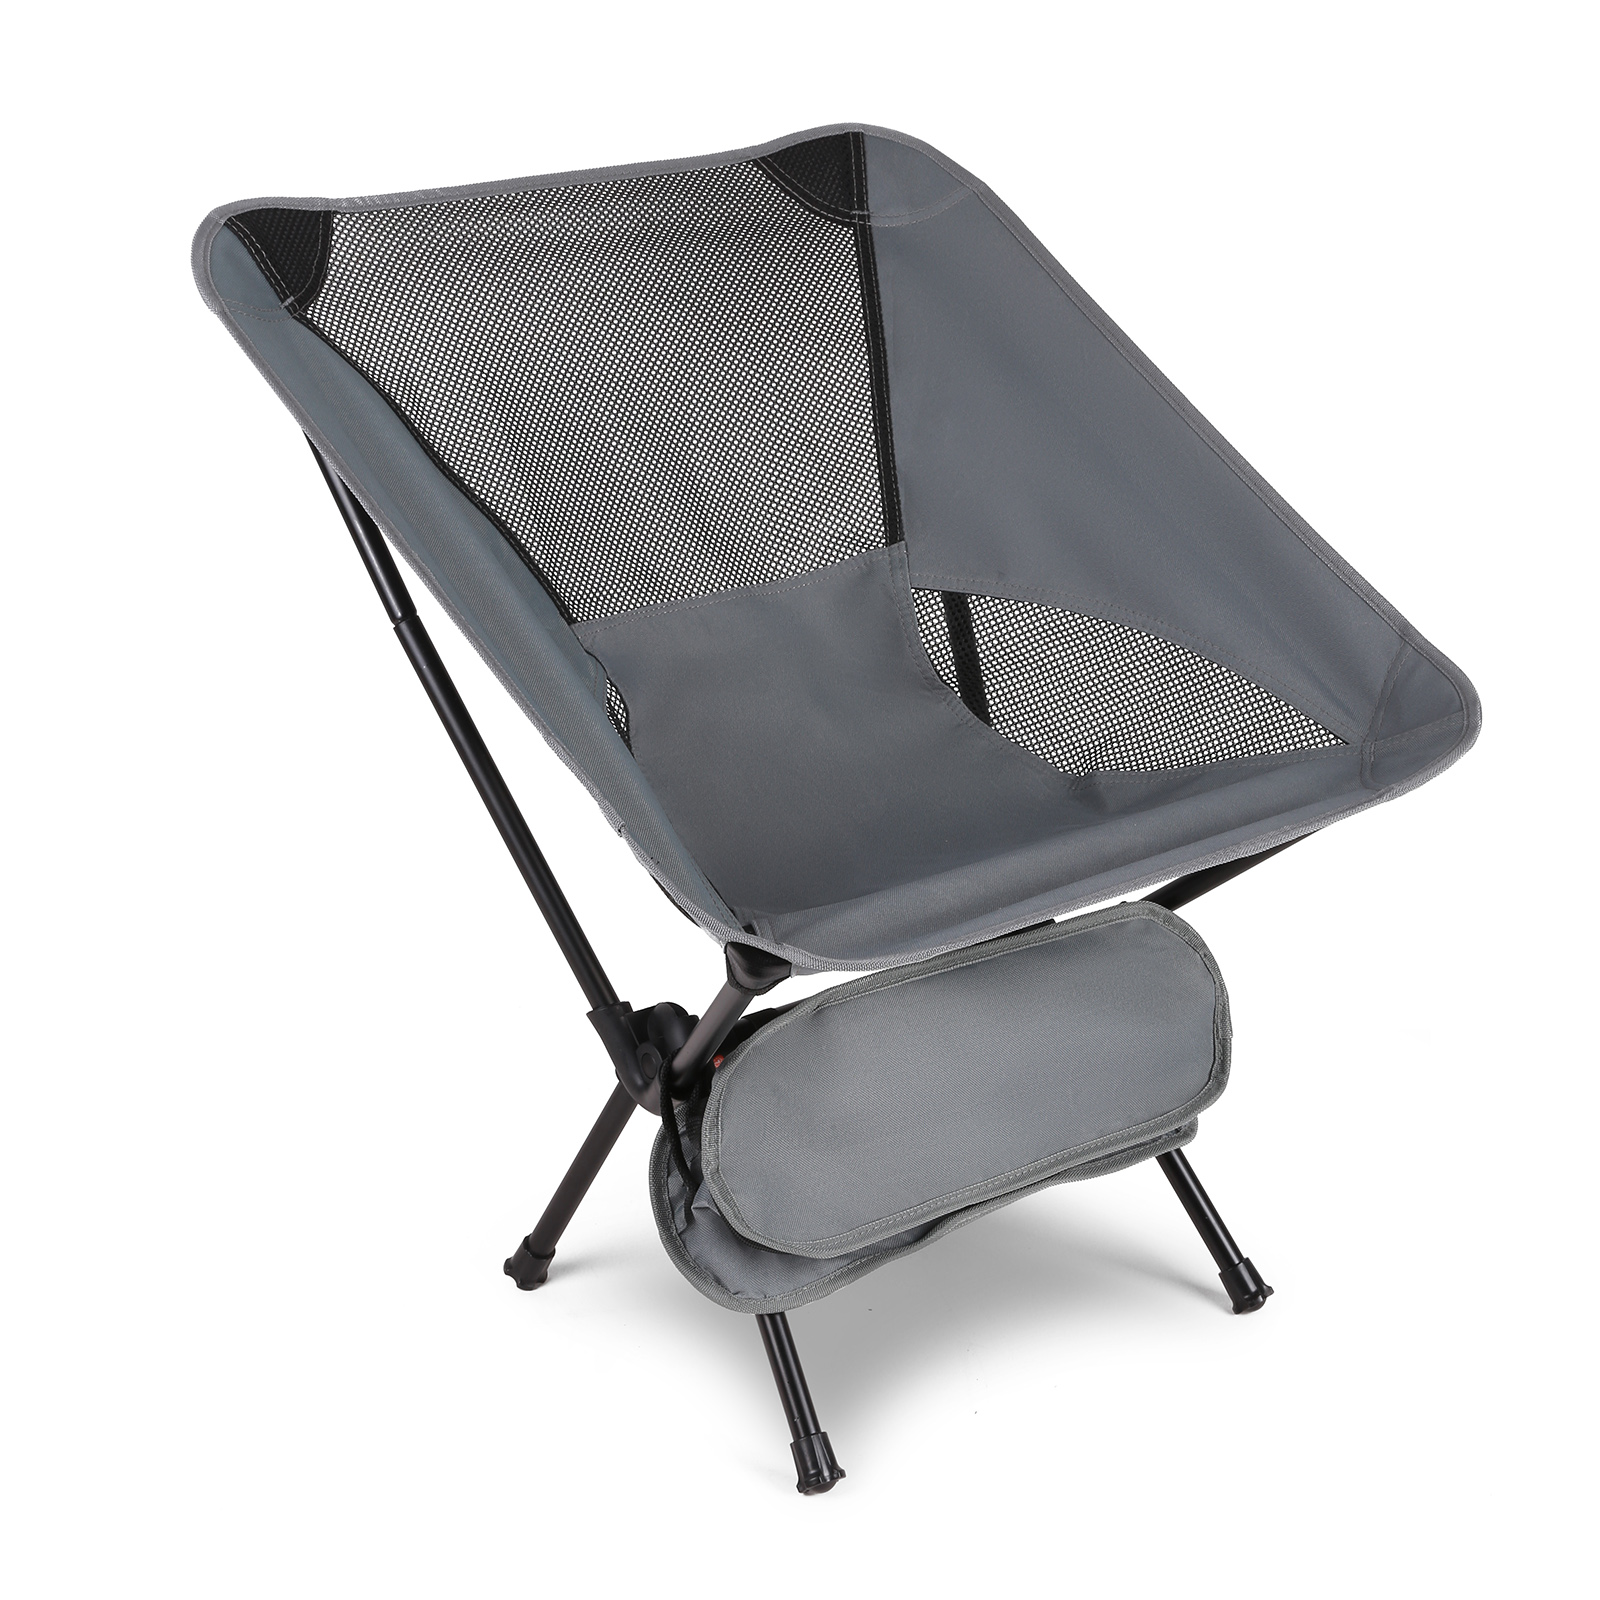 Portable Camping Mesh Chair